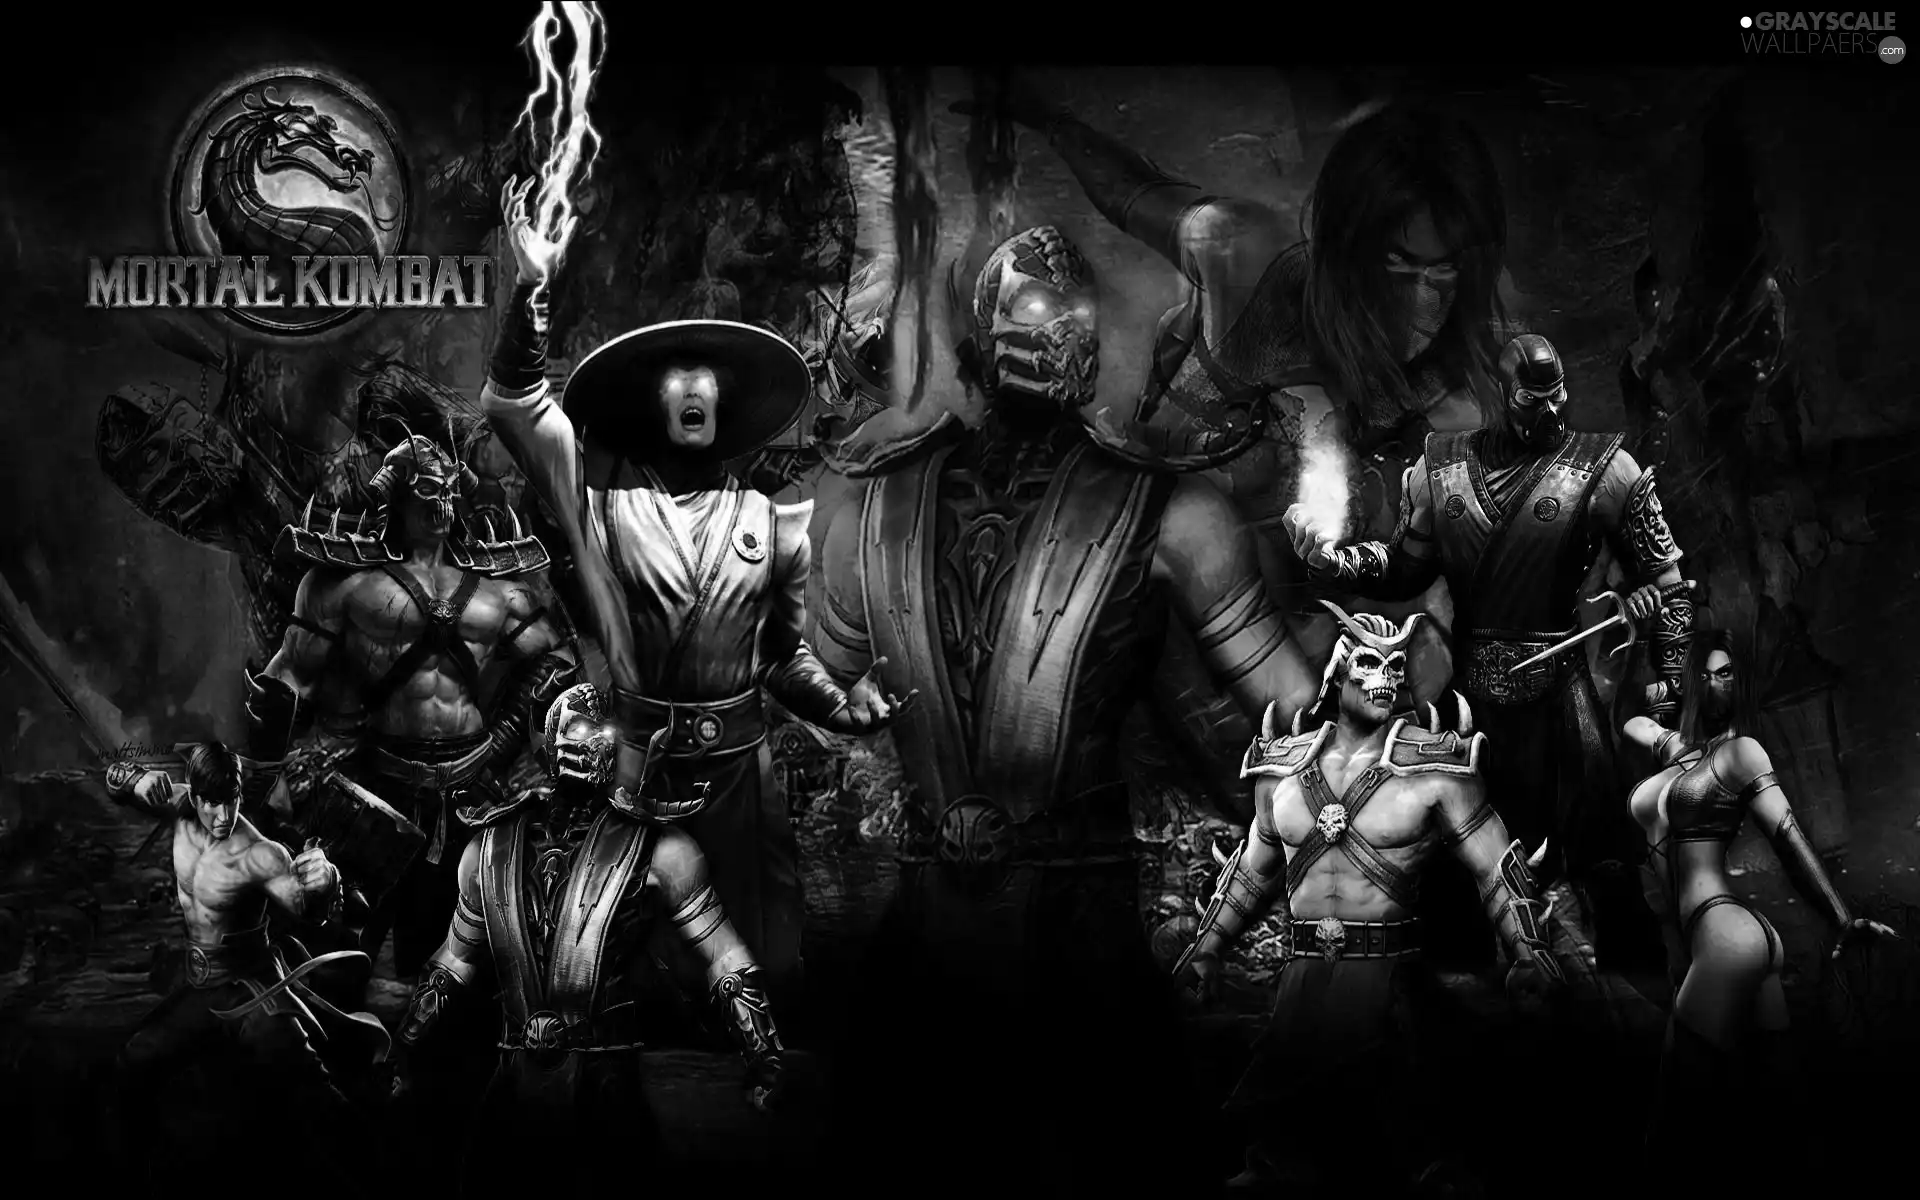 magic, underworld, Mortal Kombat, weapons, warriors